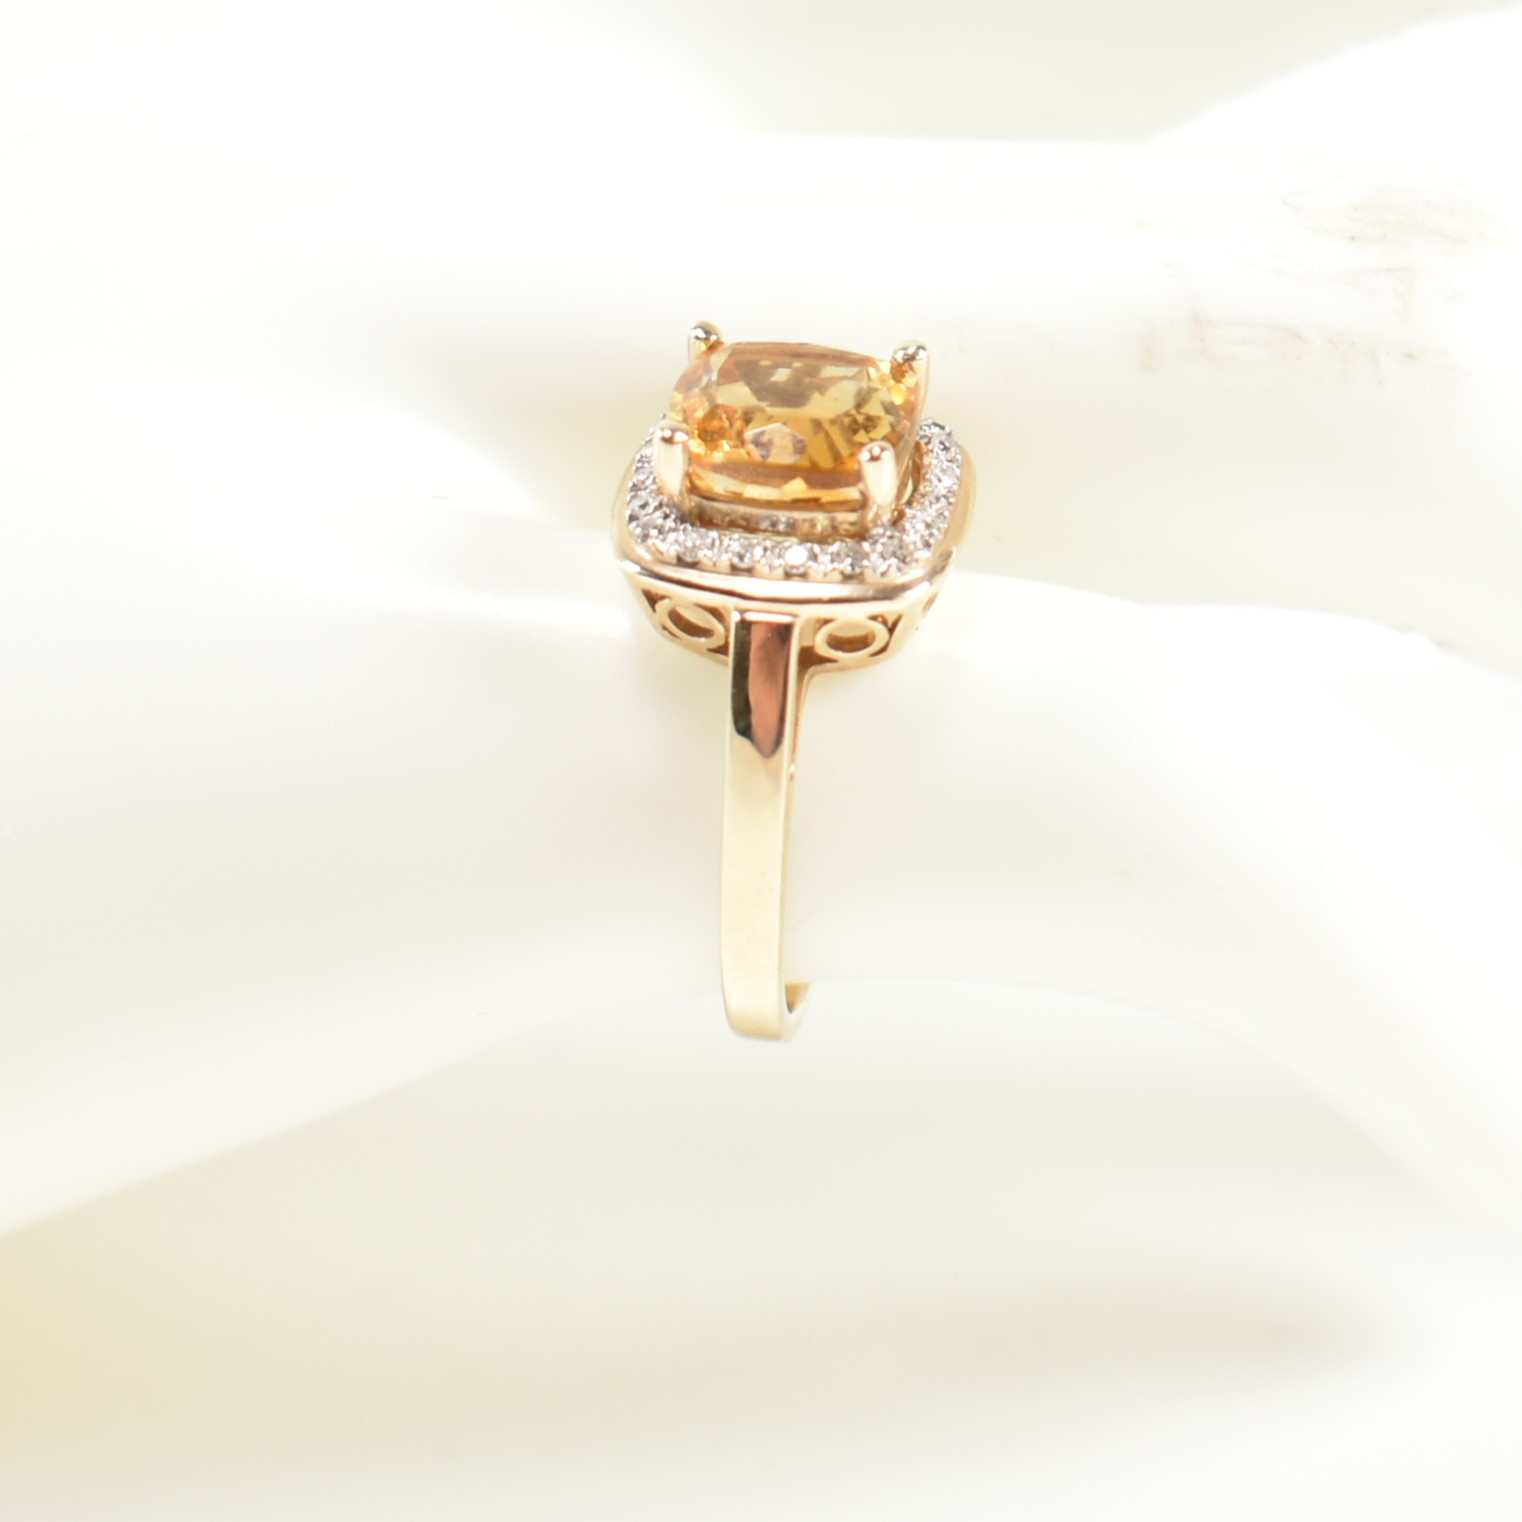 HALLMARKED 9CT GOLD CITRINE & DIAMOND RING - Image 9 of 9